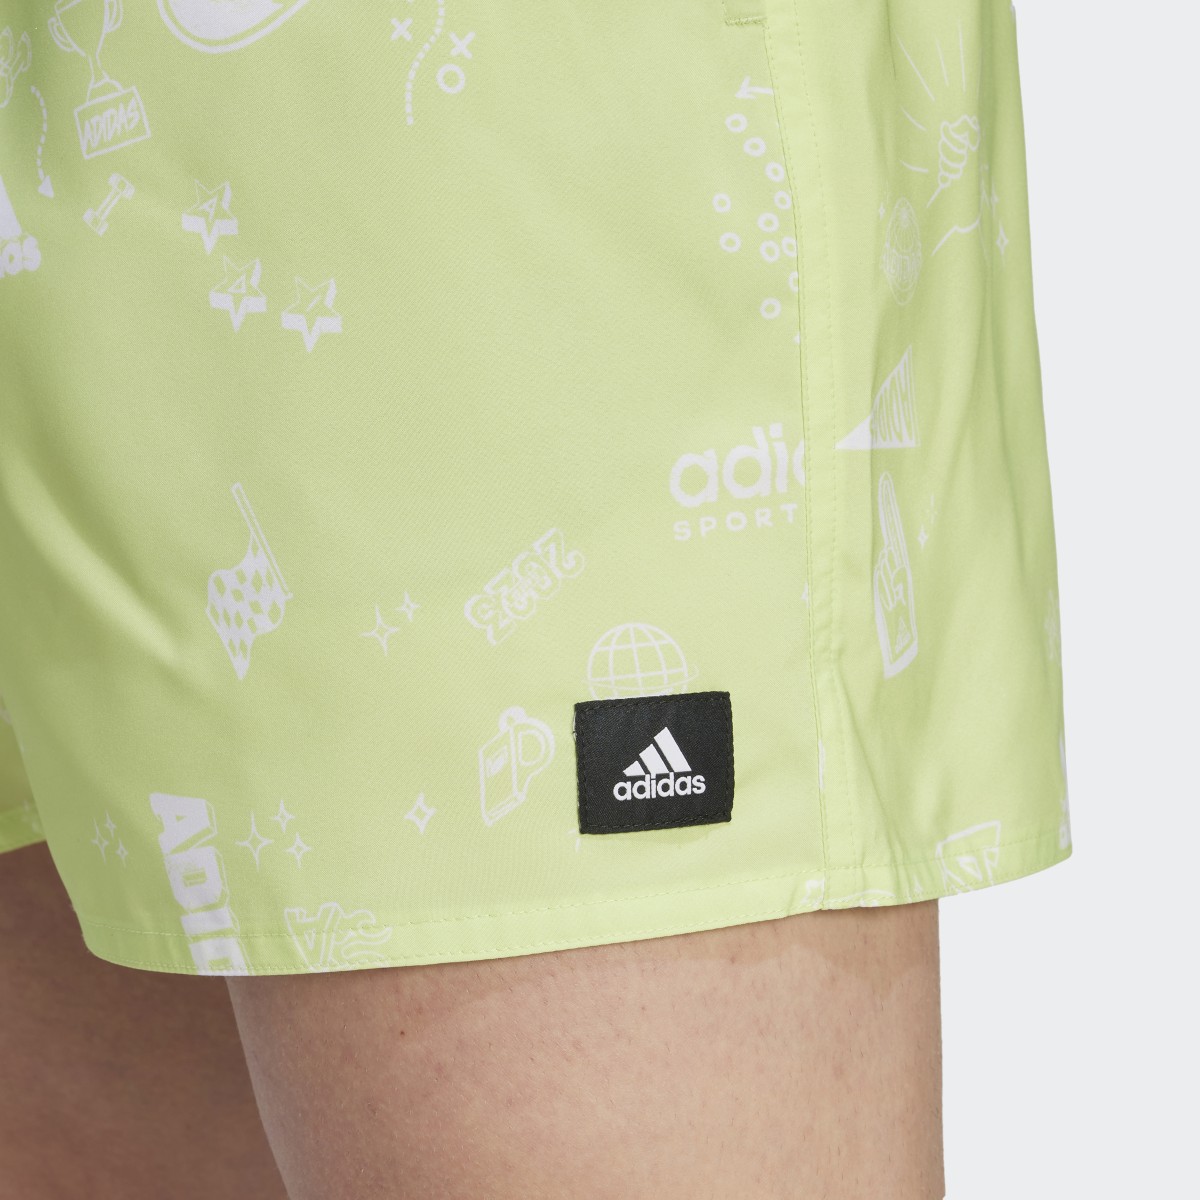 Adidas Brand Love CLX Short-Length Swim Shorts. 5